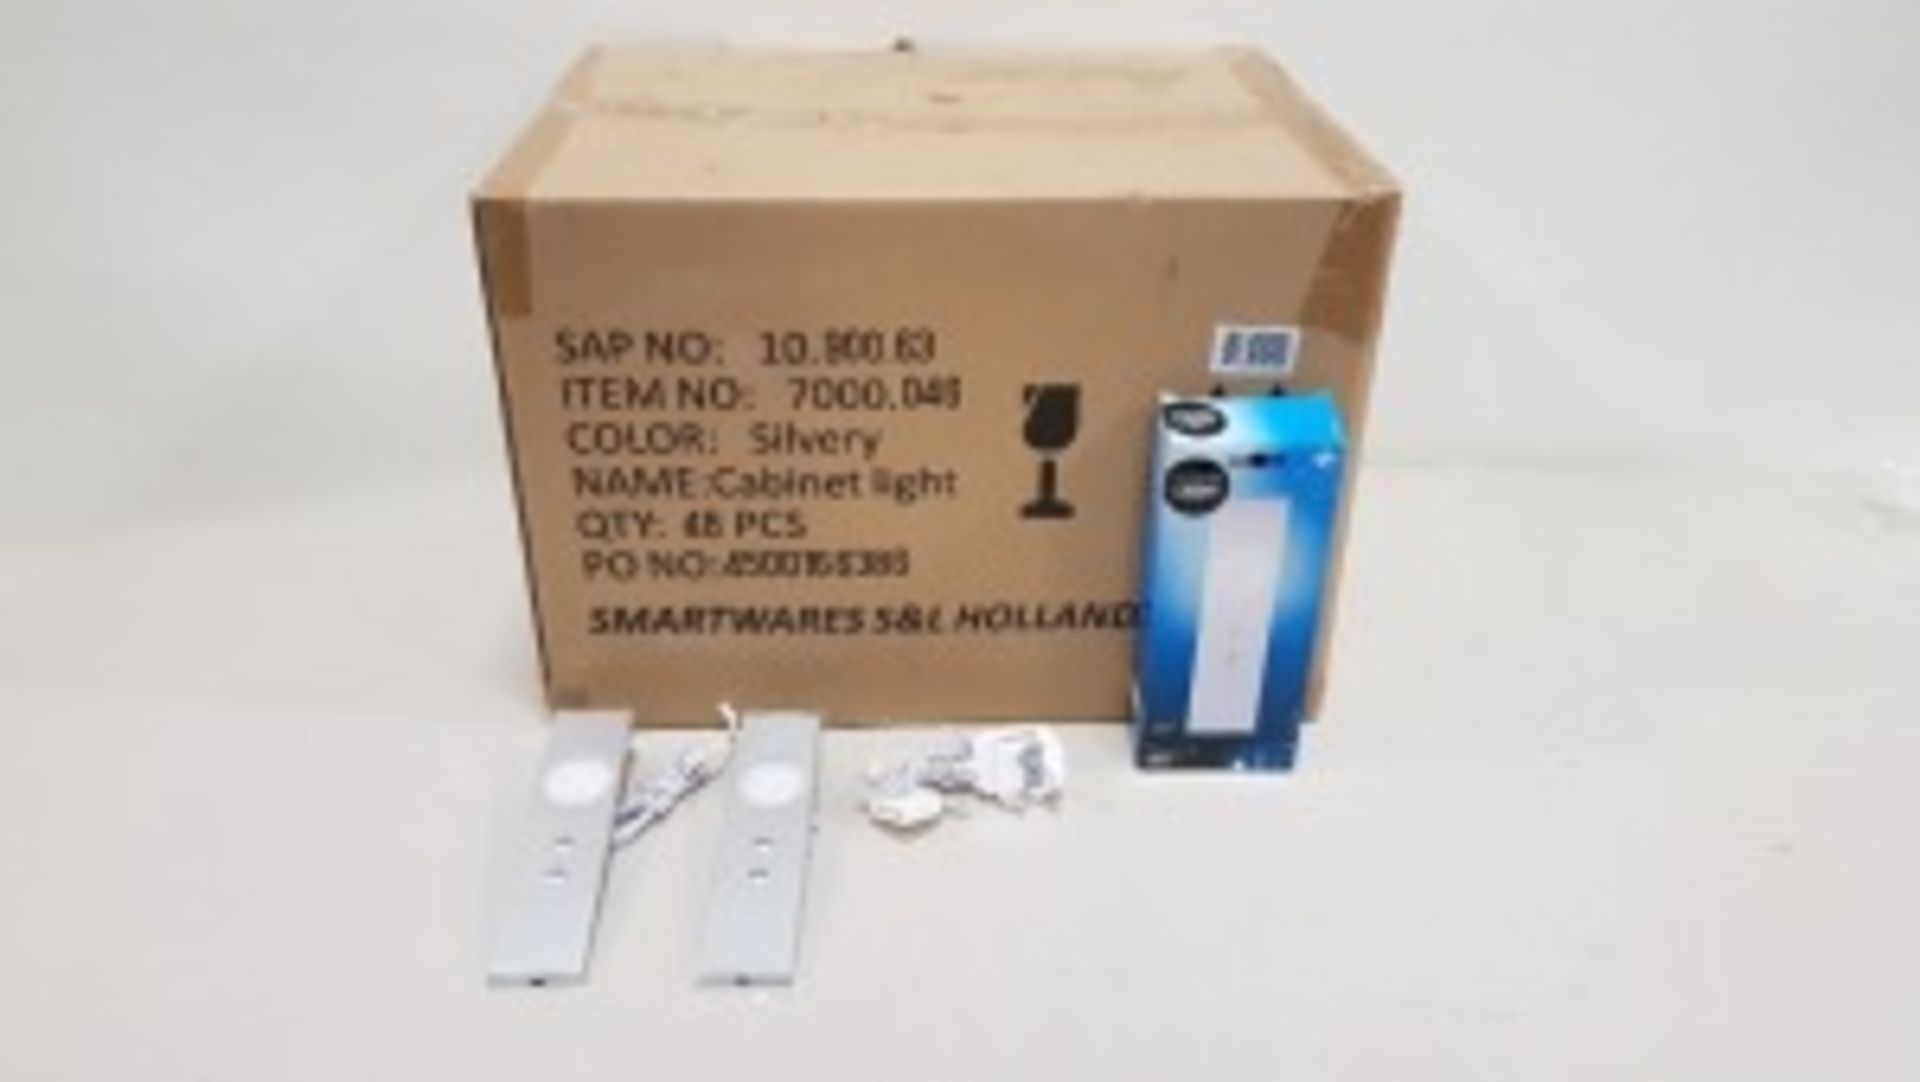 48 X BRAND NEW BOXED SMARTWARES SENSOR OPTIONAL LED UNDER CABINET LIGHT - RANEX CODE 10.900.63 (